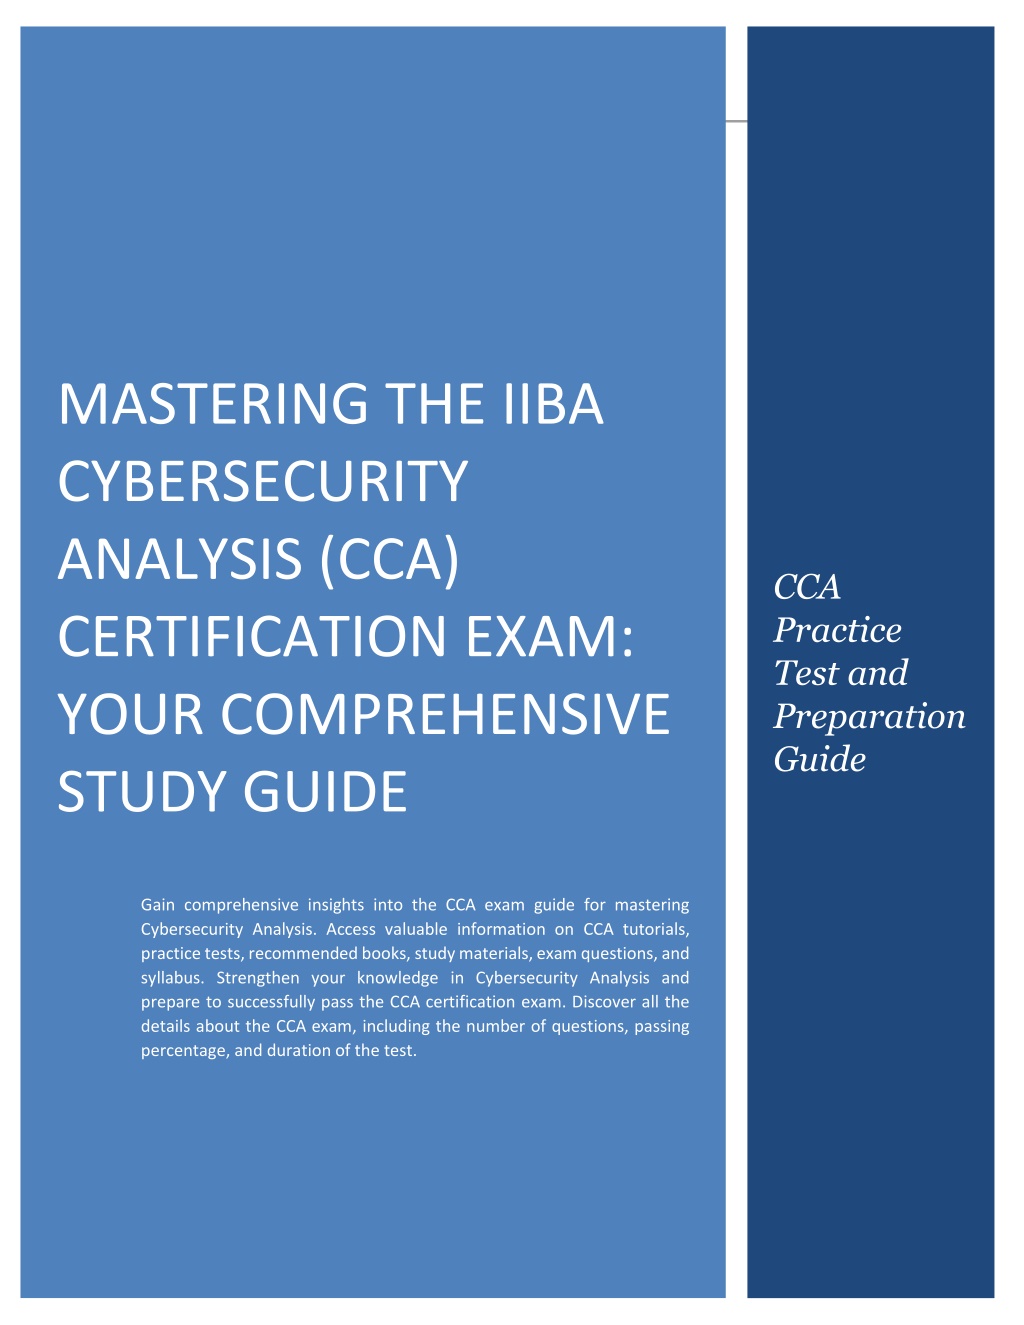 PPT Mastering the IIBA Cybersecurity Analysis (CCA) Certification